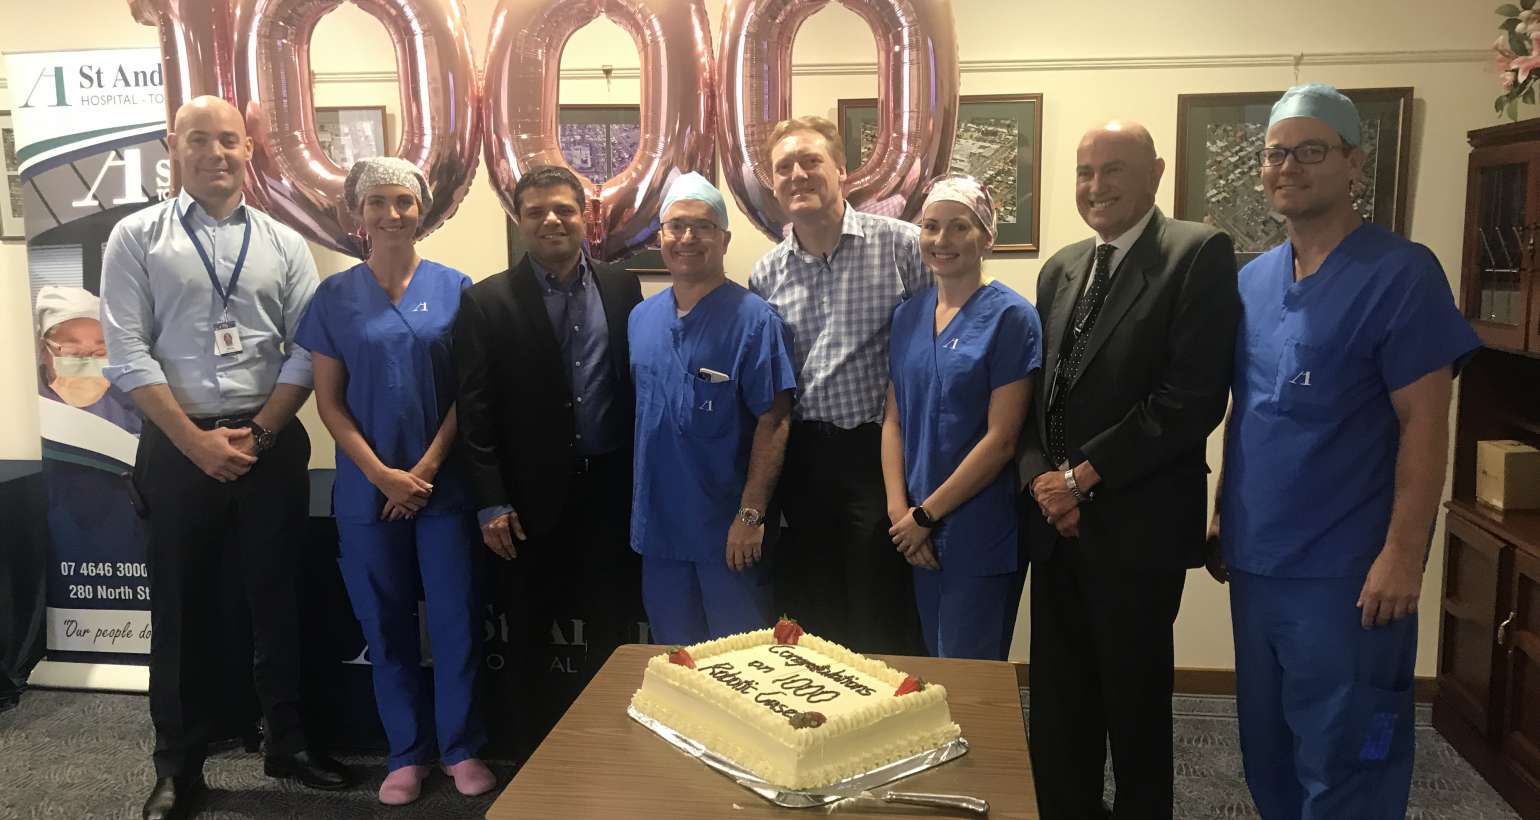 The Robotic Surgeons, Theatre Staff and Executive Team celebrate the robotic surgery milestone achievement.